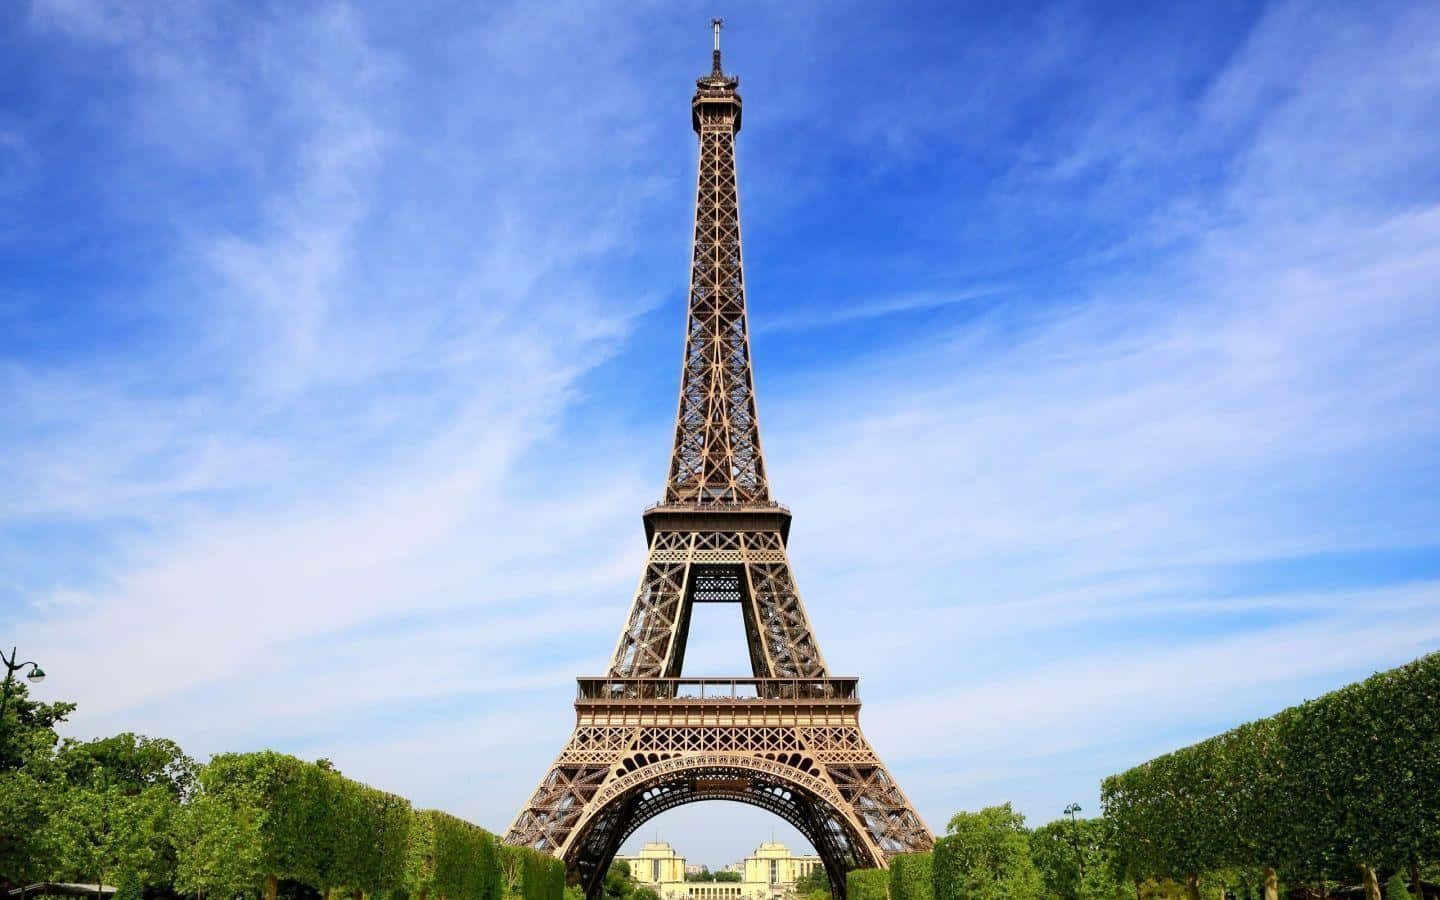 Eiffeltårnetstår Højt Og Stolt I Byen Paris.